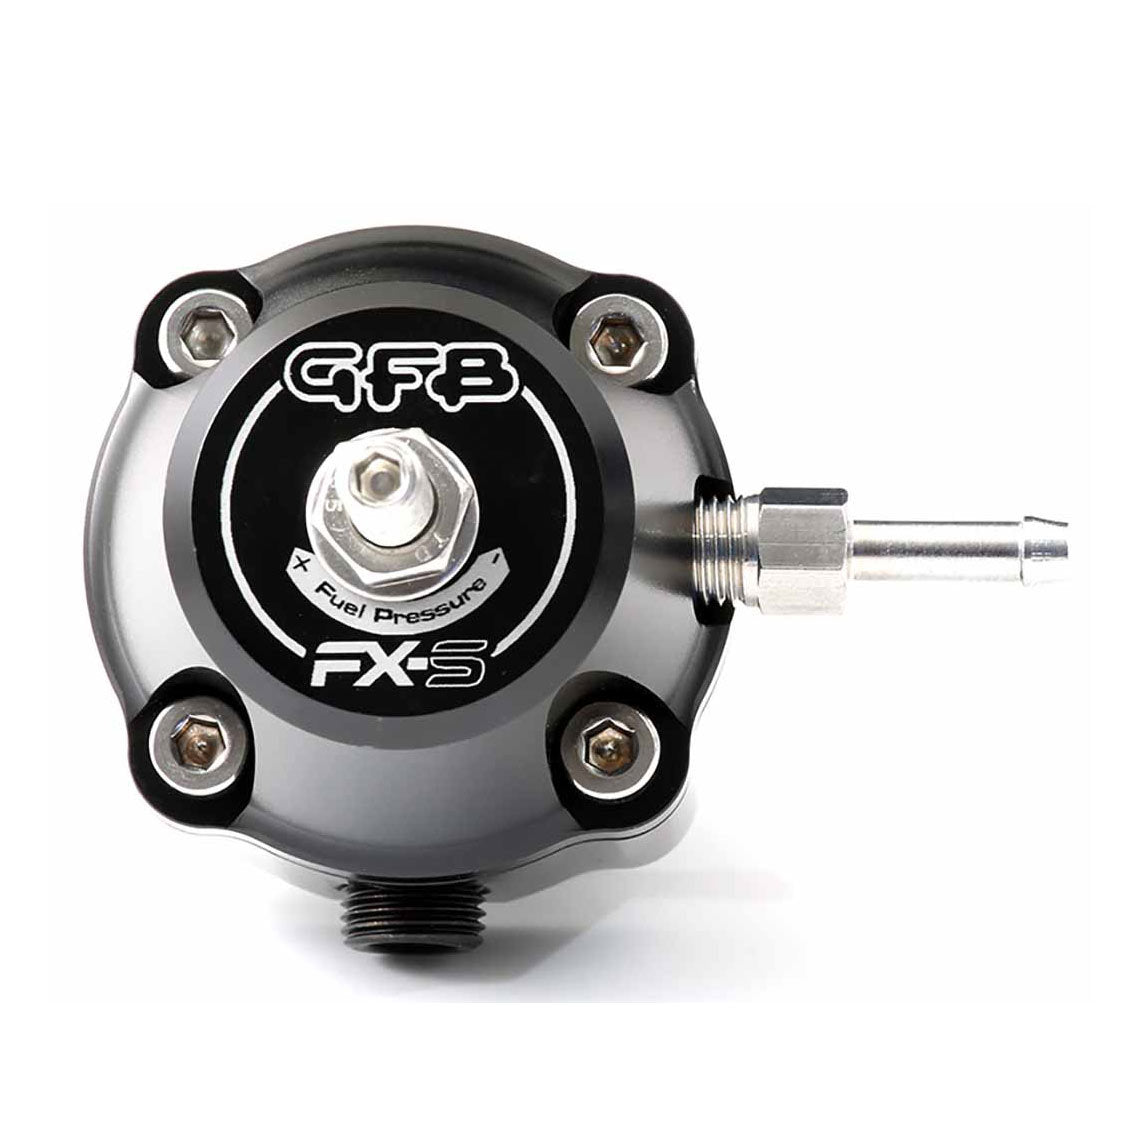 GFB - FX-S Fuel Pressure Regulator